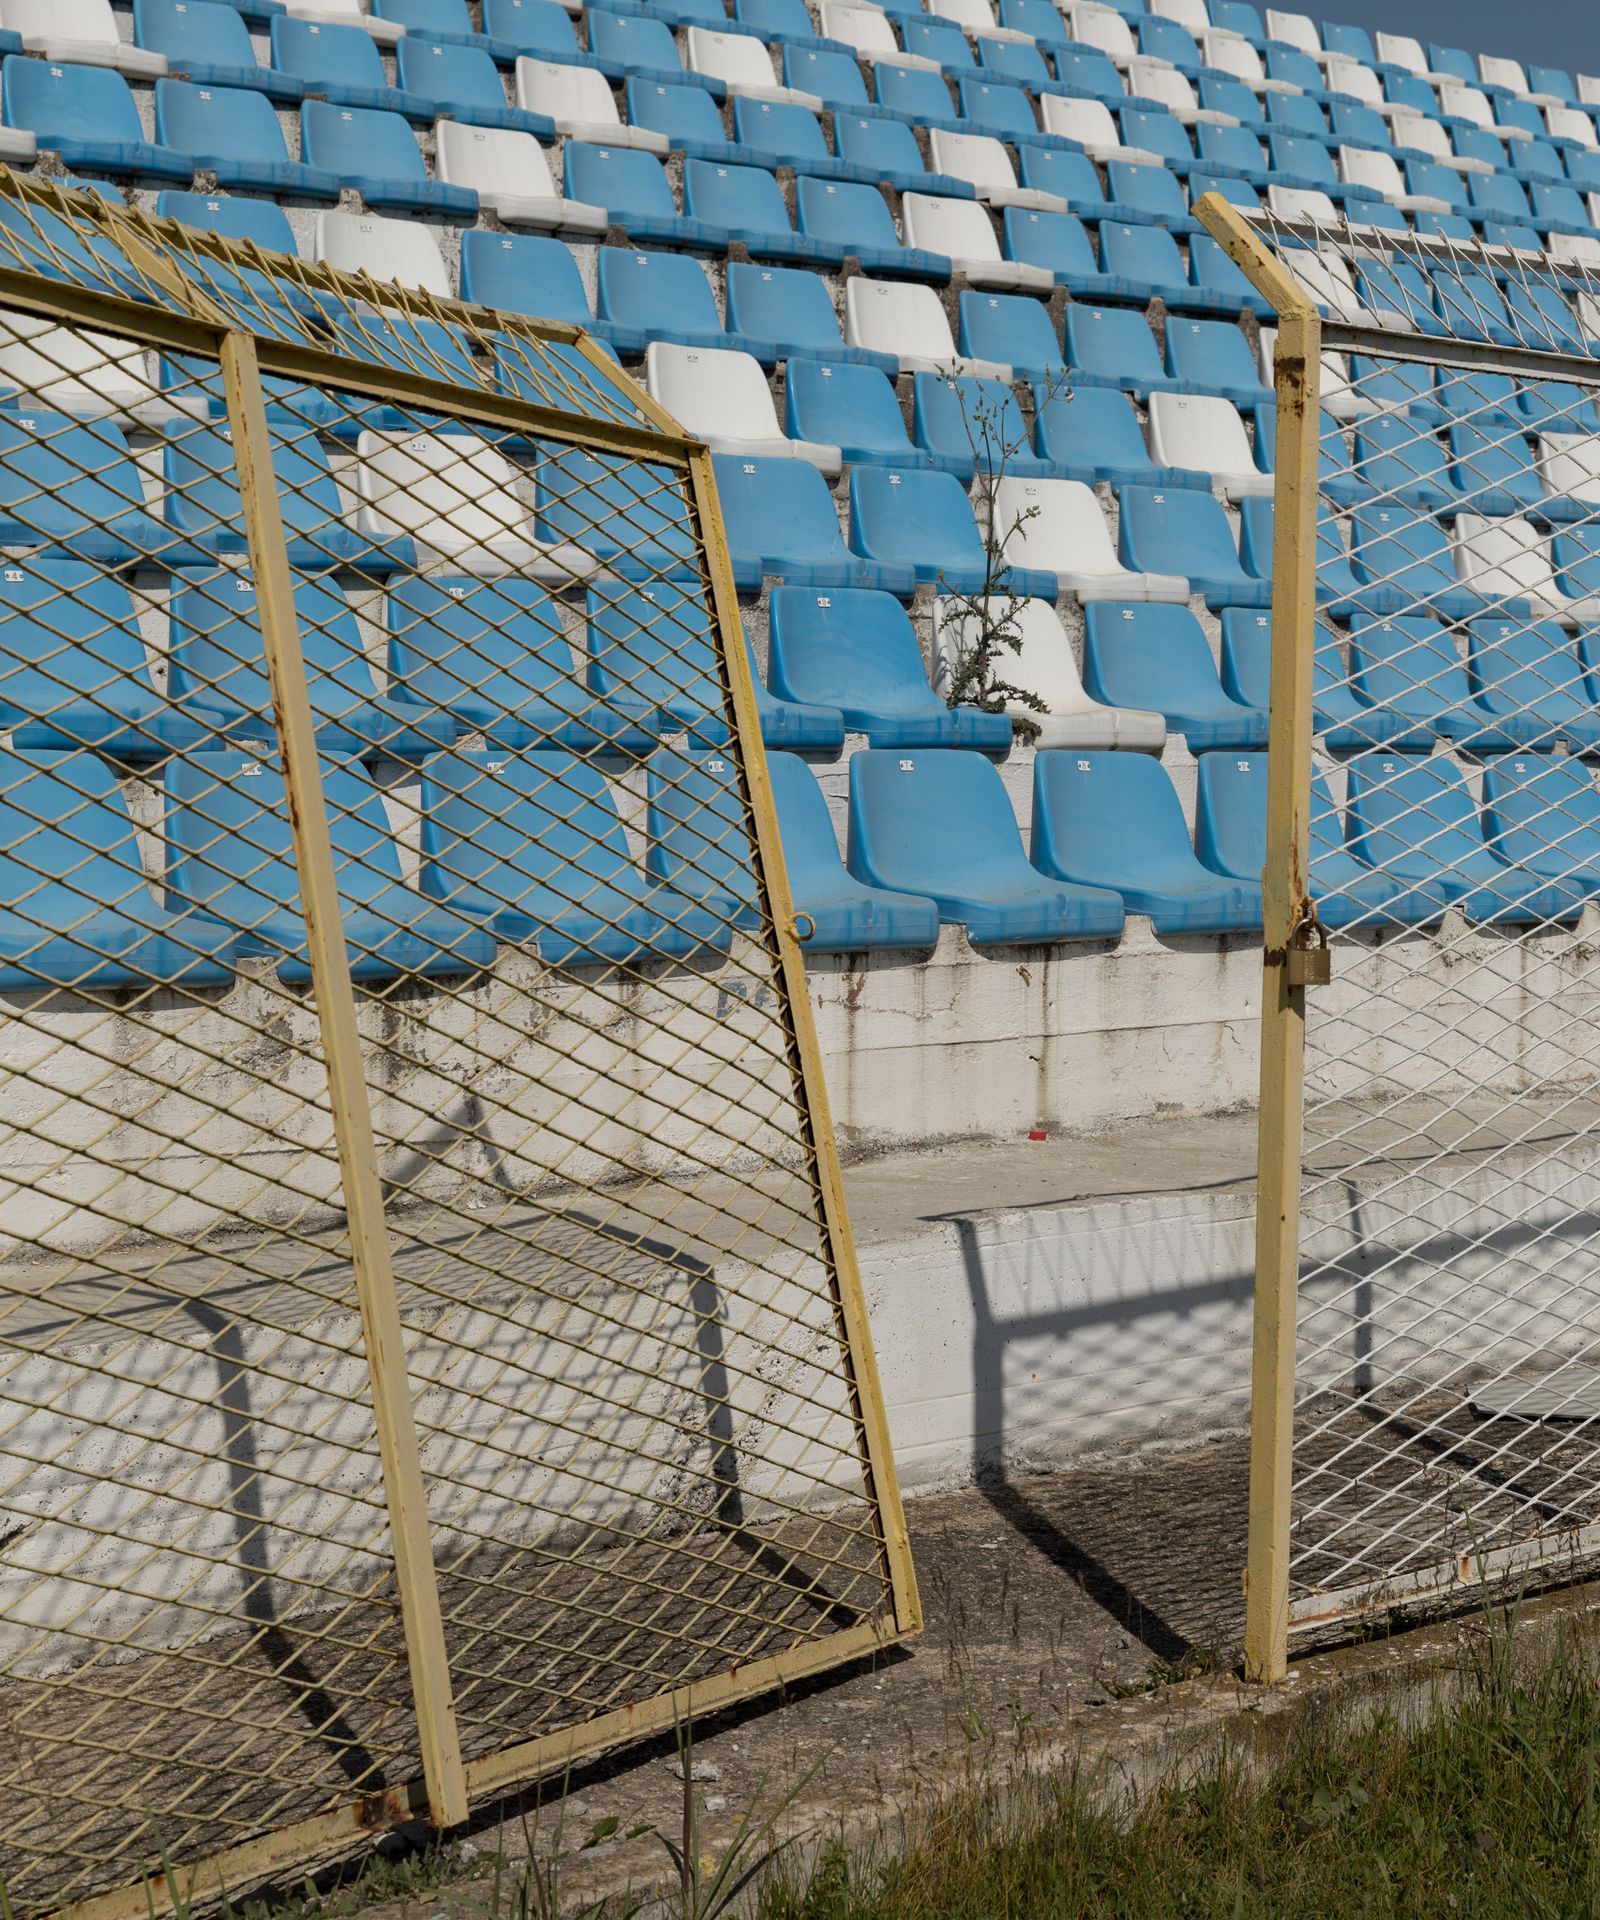 © Matteo De Mayda - Tribune of the stadium of FK Belasica, Strumica. North Macedonia, 2020.